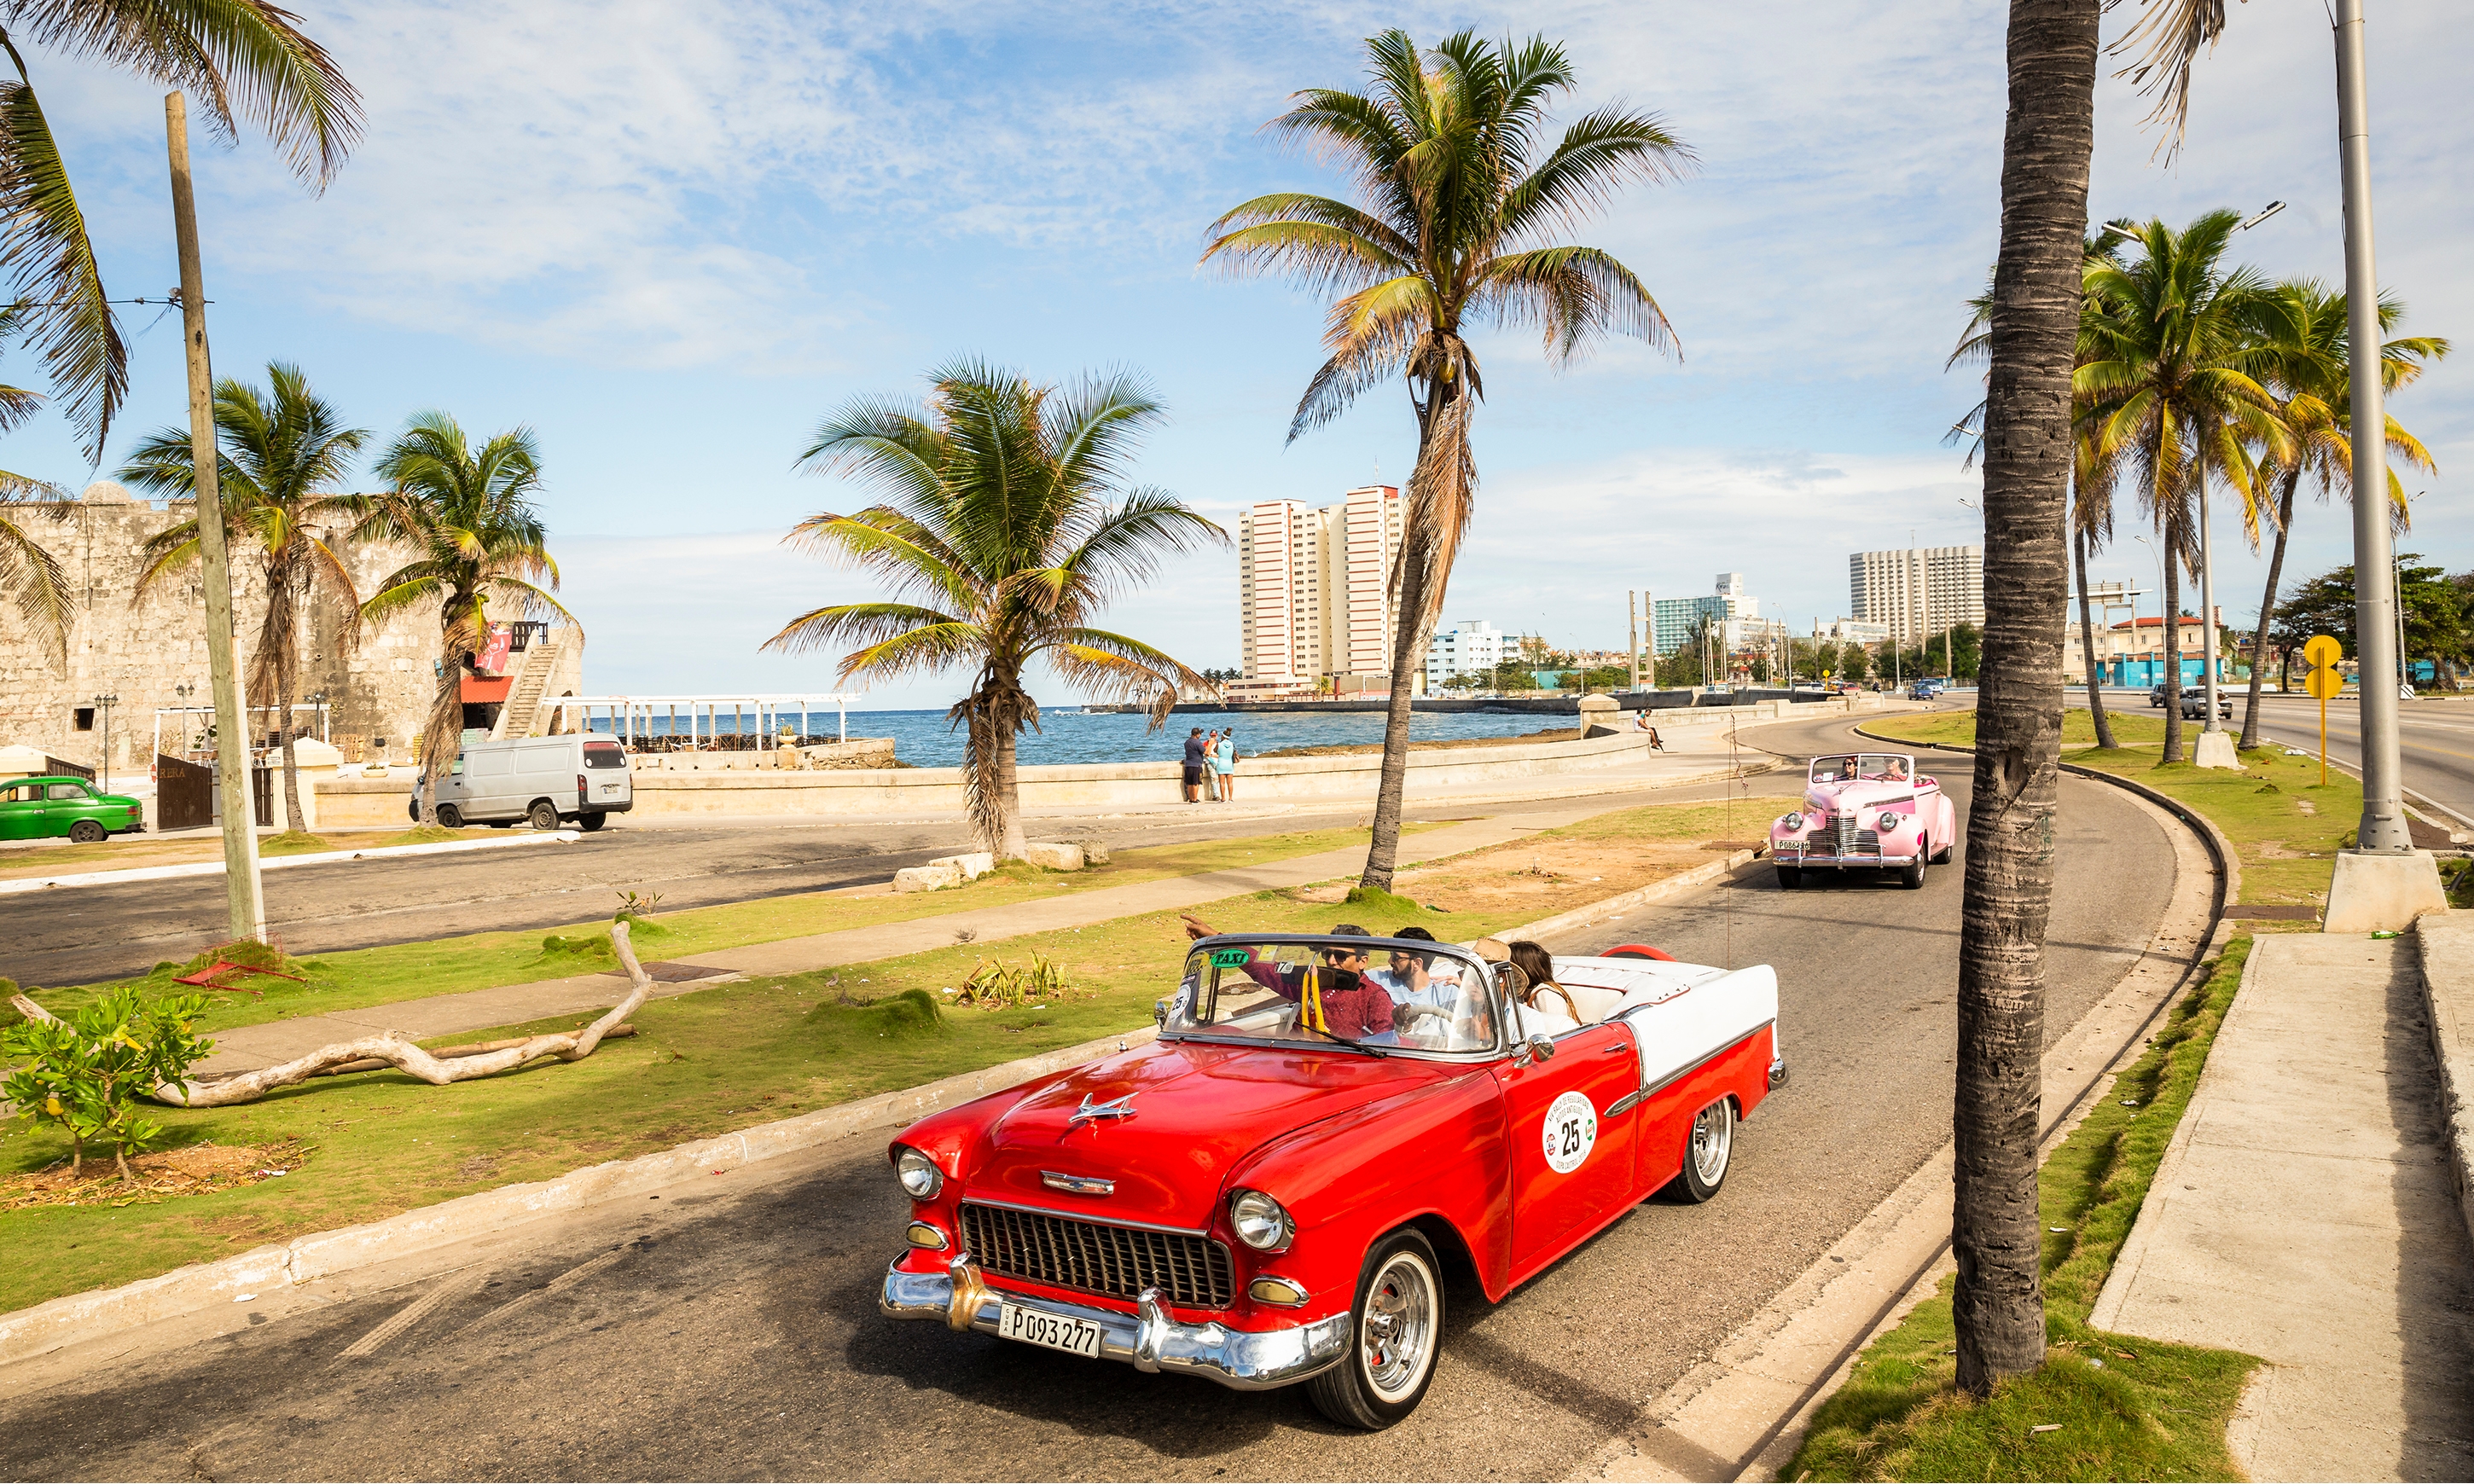 Nacional de Cuba - Havana